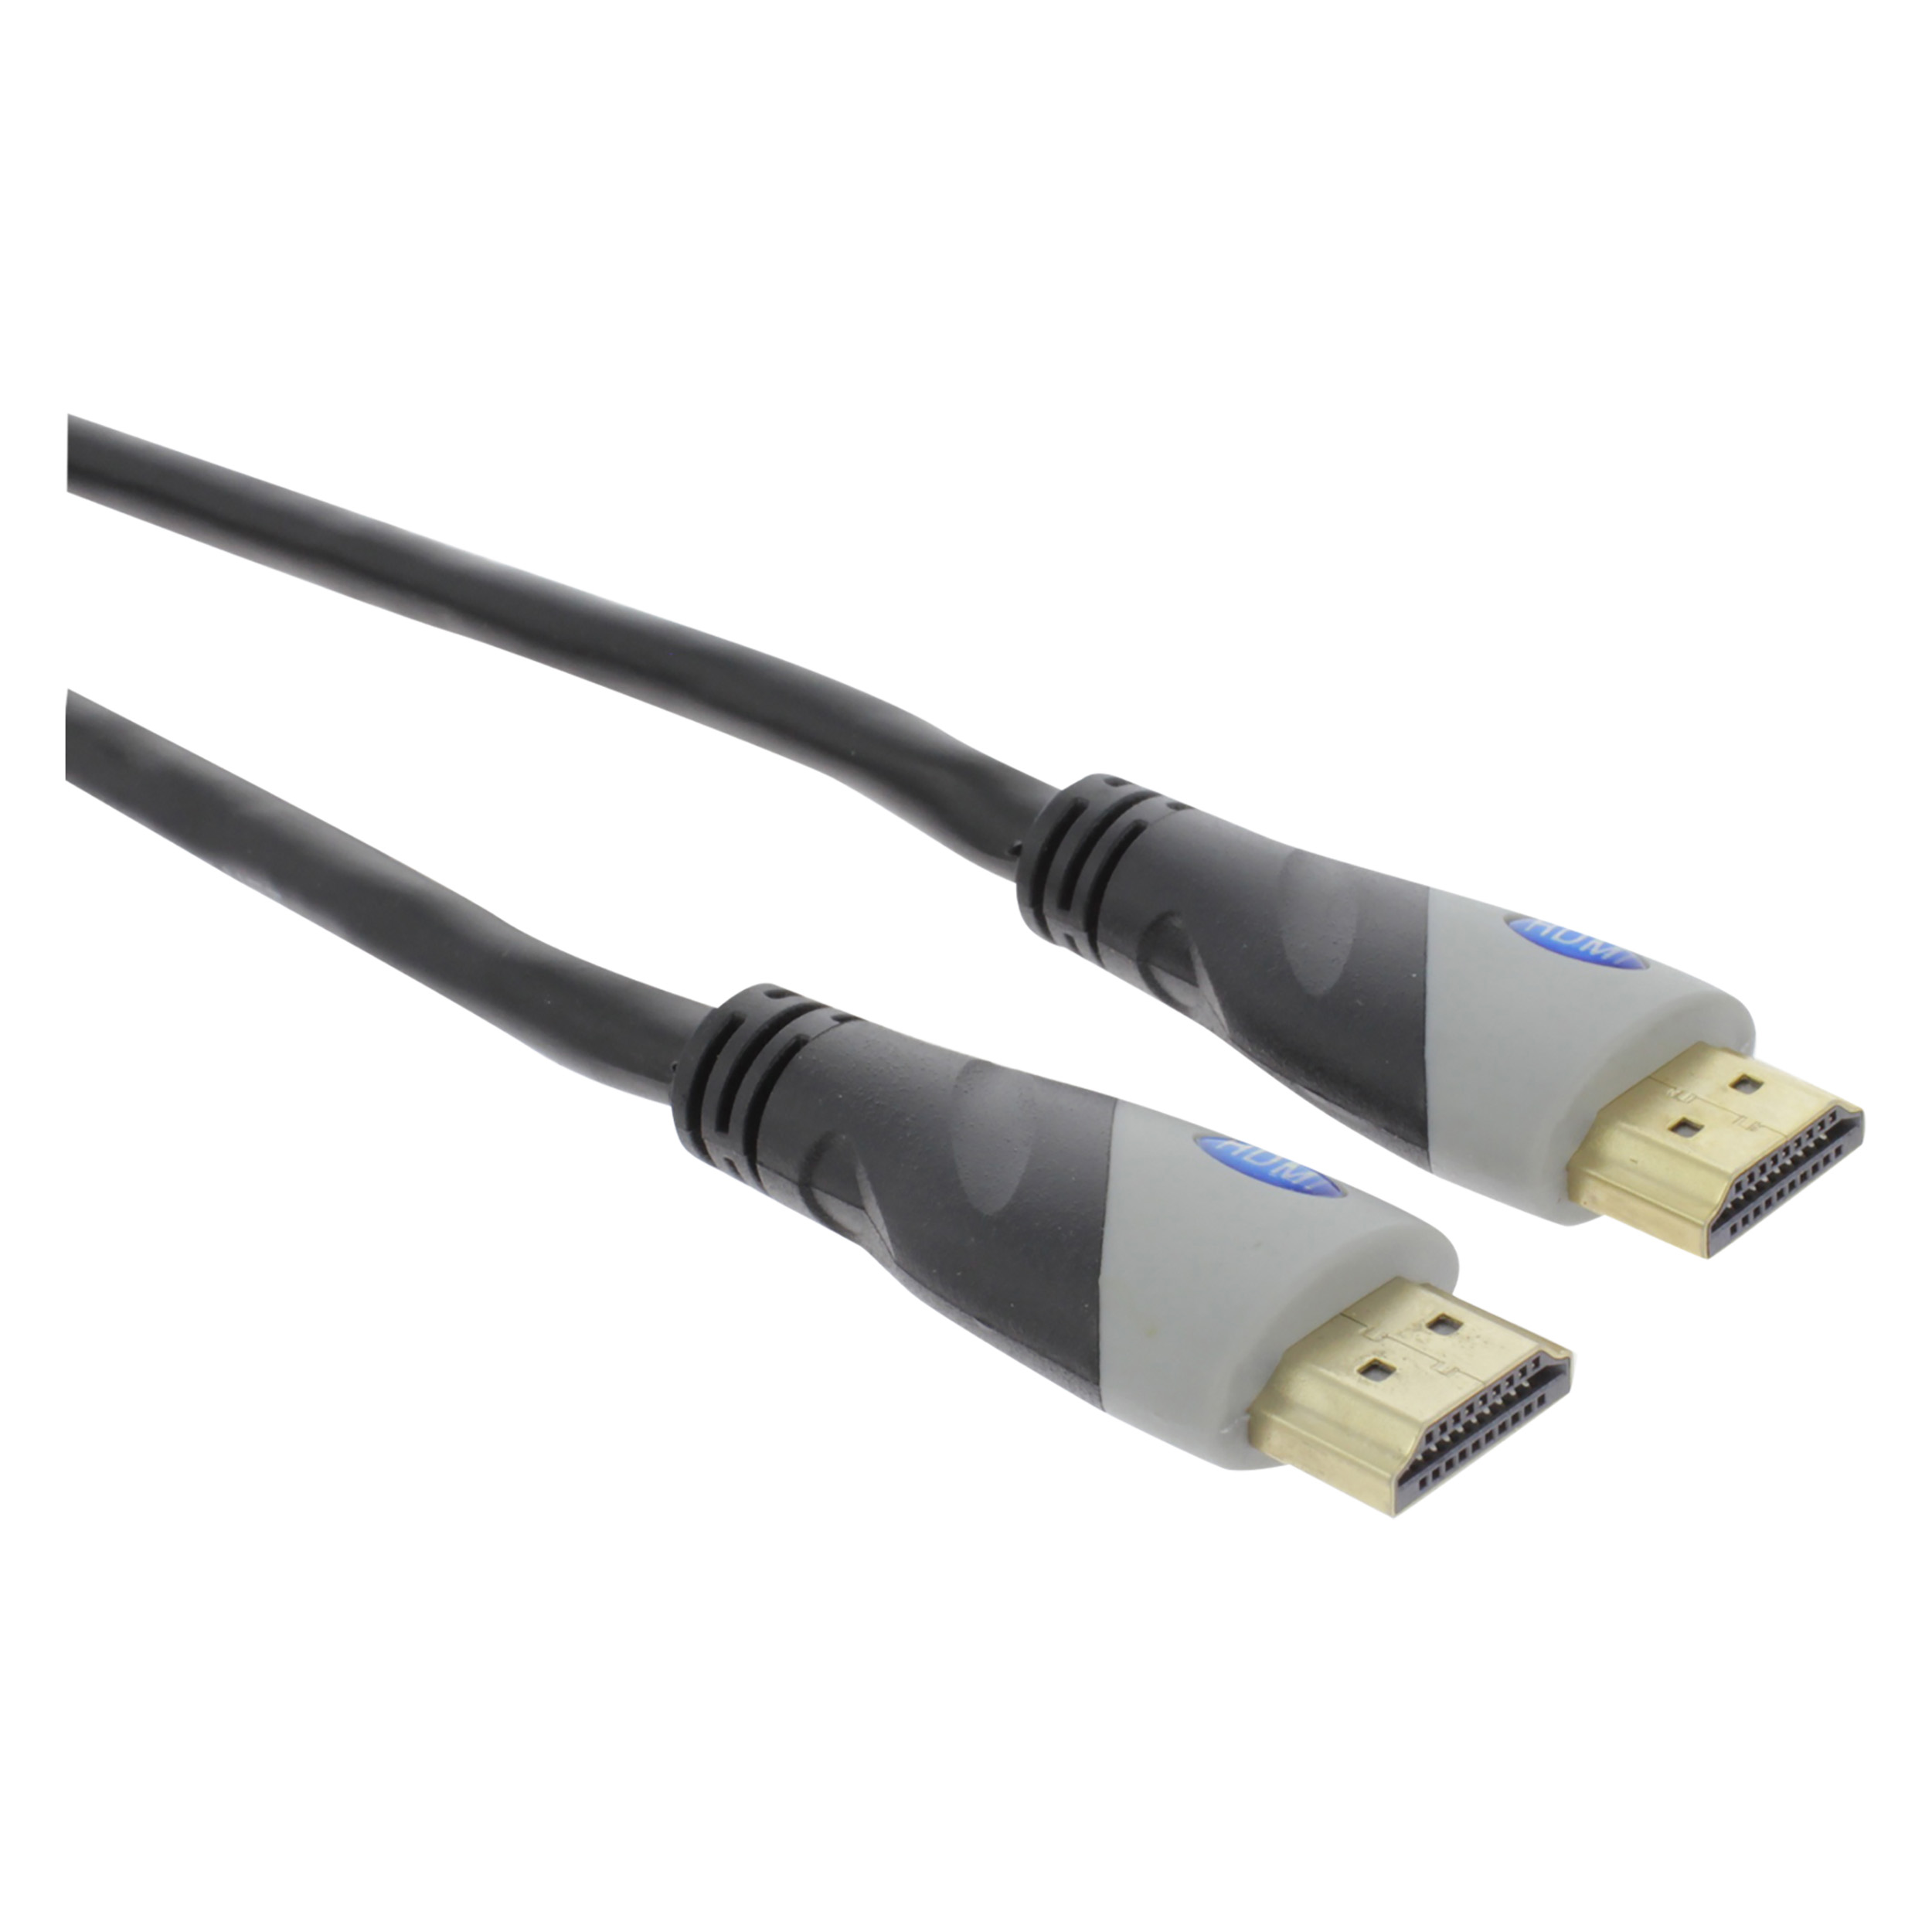 00.131.12 Q-Link  HDMI kabel high speed - 2 m - zwart